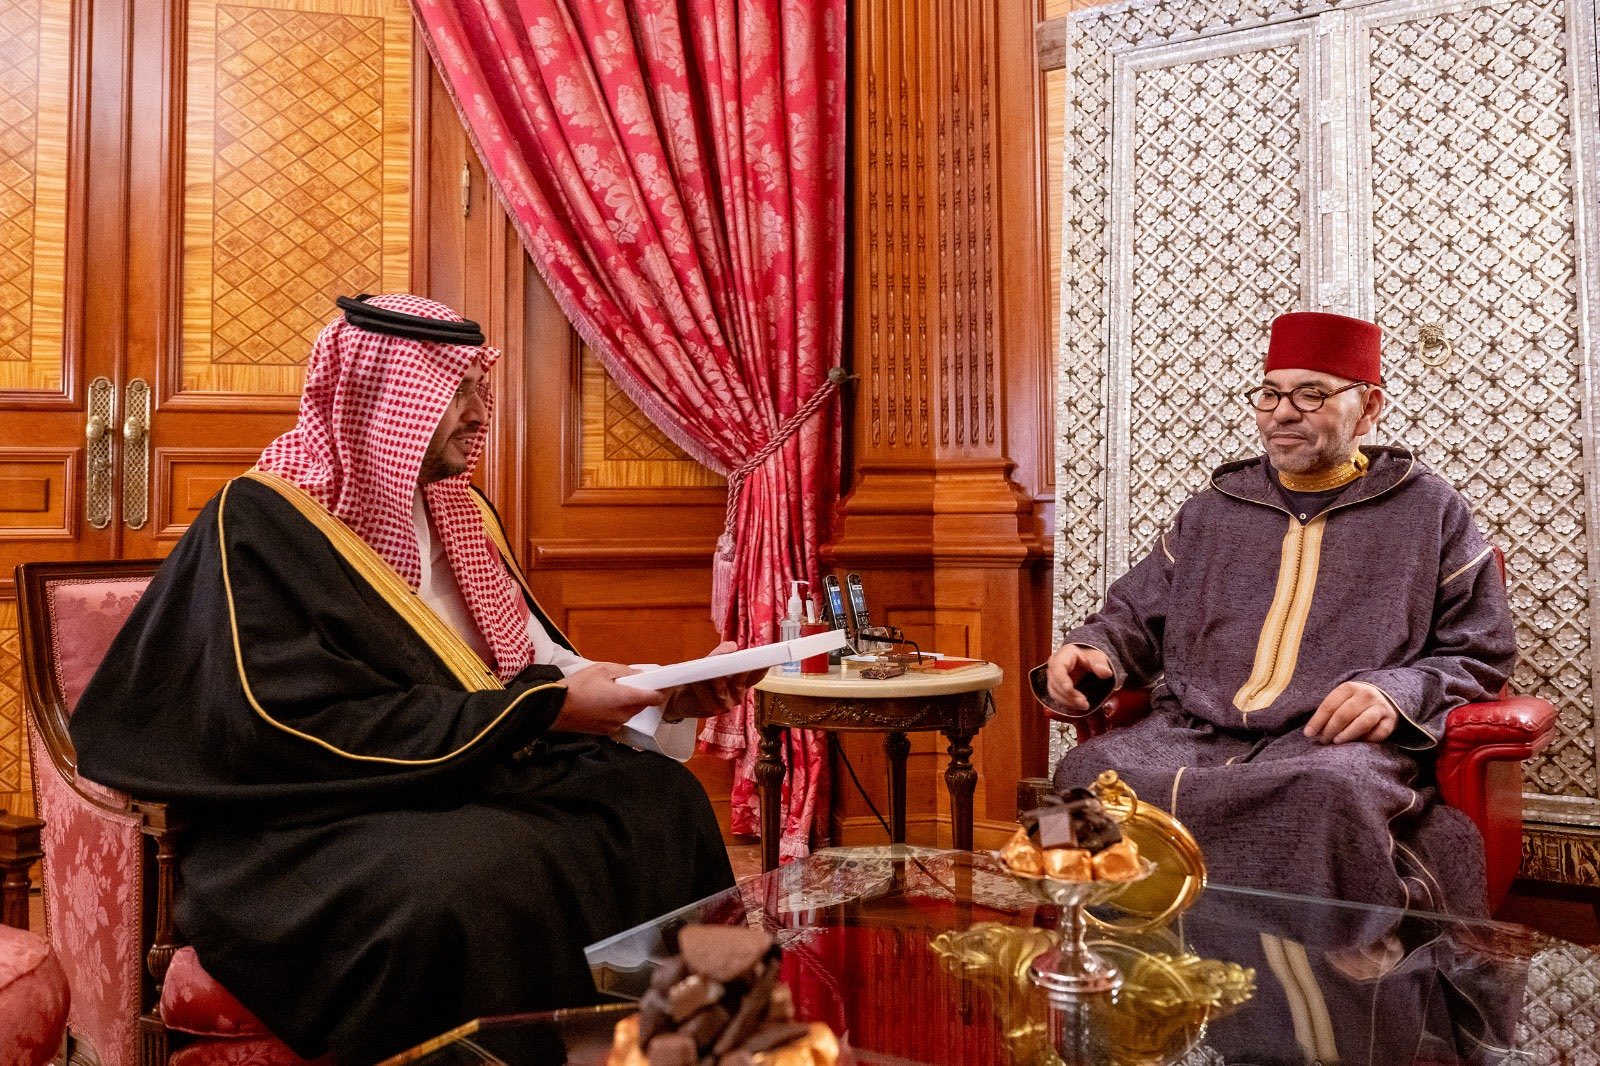 HM King Mohammed VI Receives HRH Prince Turki bin Mohammed bin Fahd bin Abdulaziz Al Saud